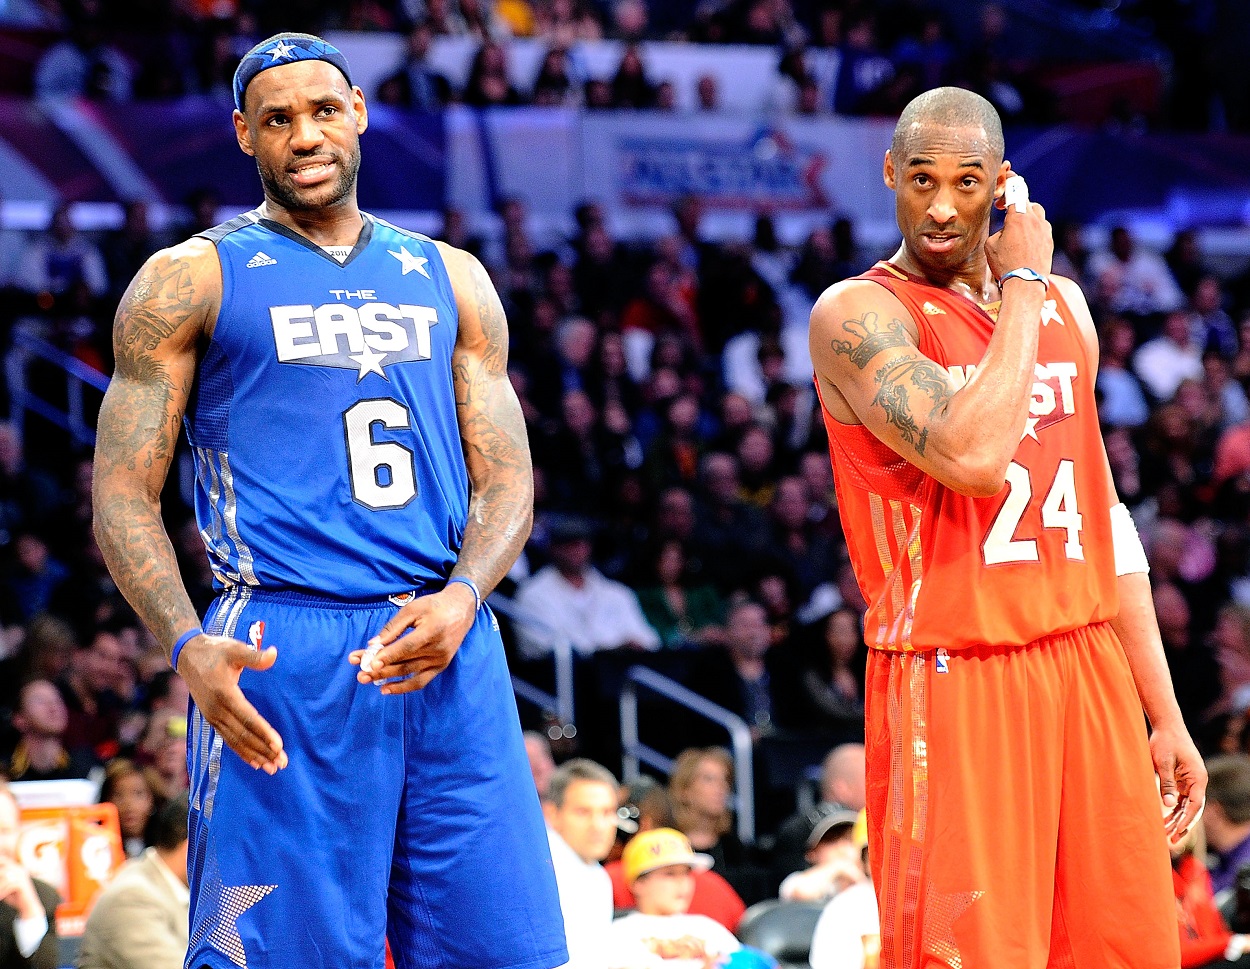 LeBron James and Kobe Bryant at the 2011 NBA All-Star Game